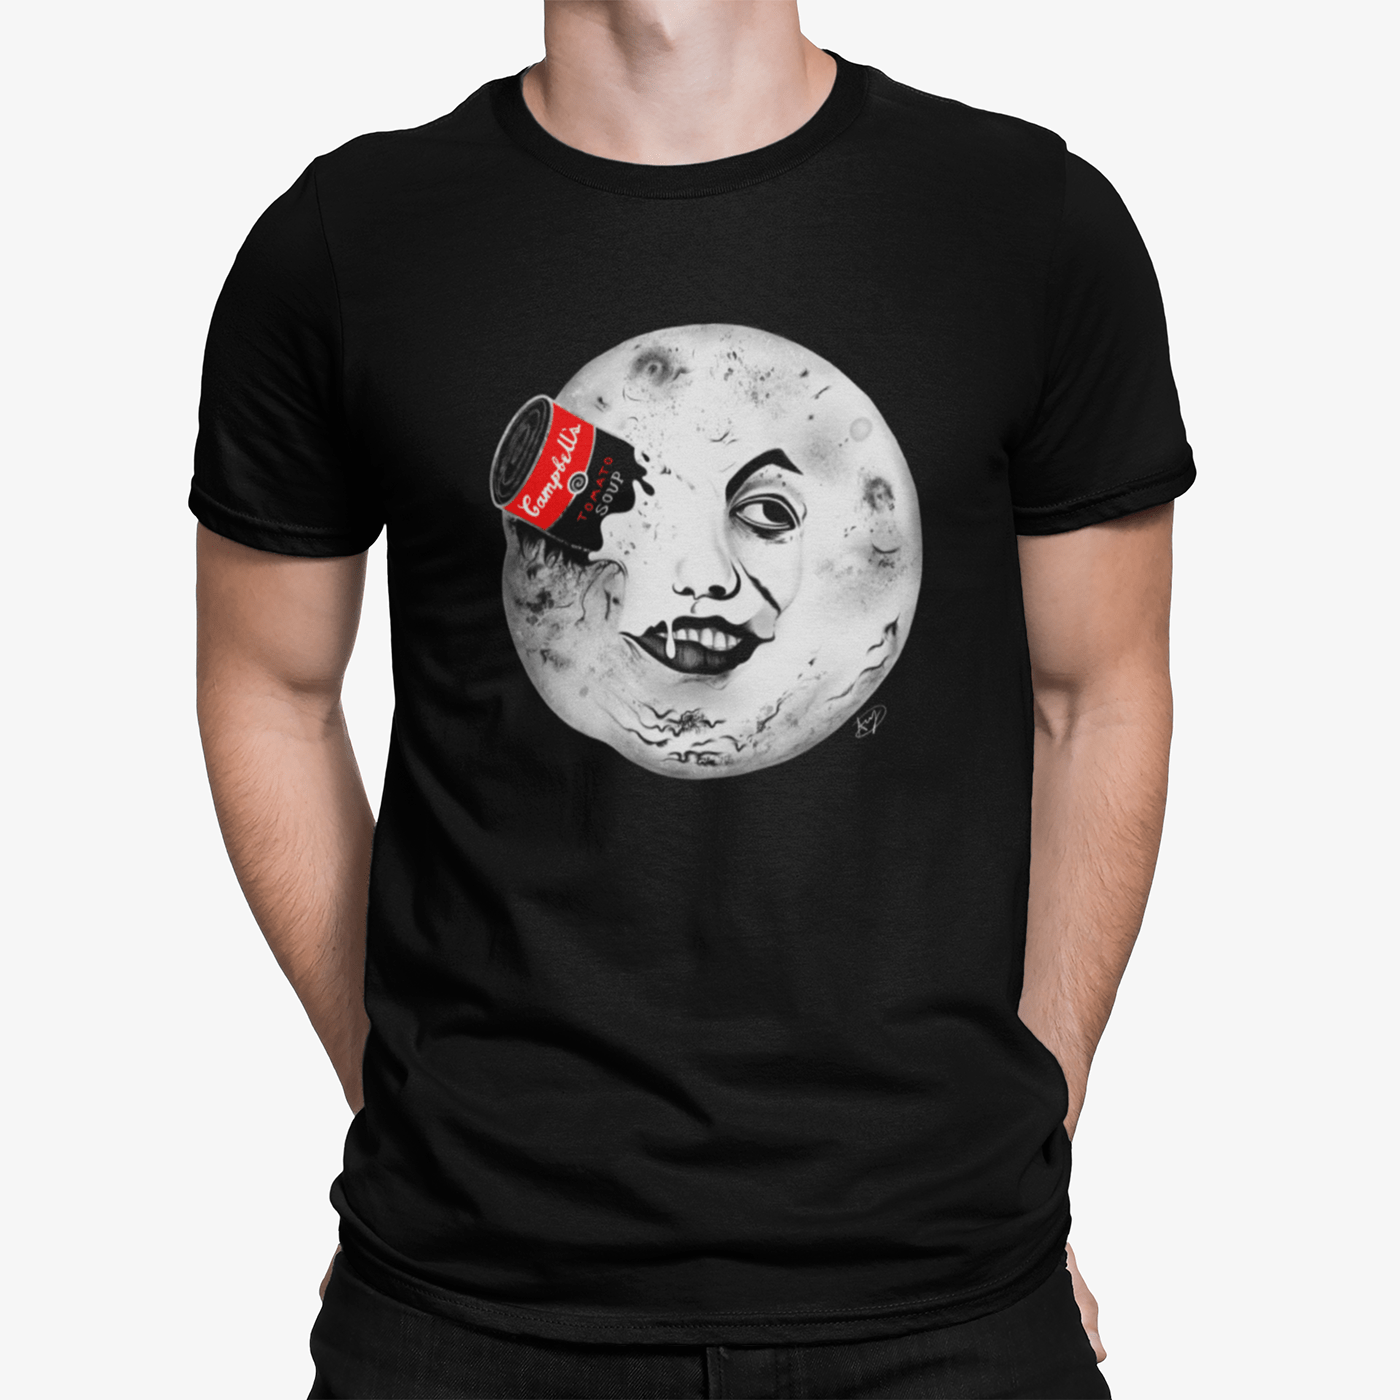  a trip to the moon Andy Warhol art Cinema design George george melies  luna melies moon movie pop Pop Art tomato soup can viaggio nella luna voyage dans là lune